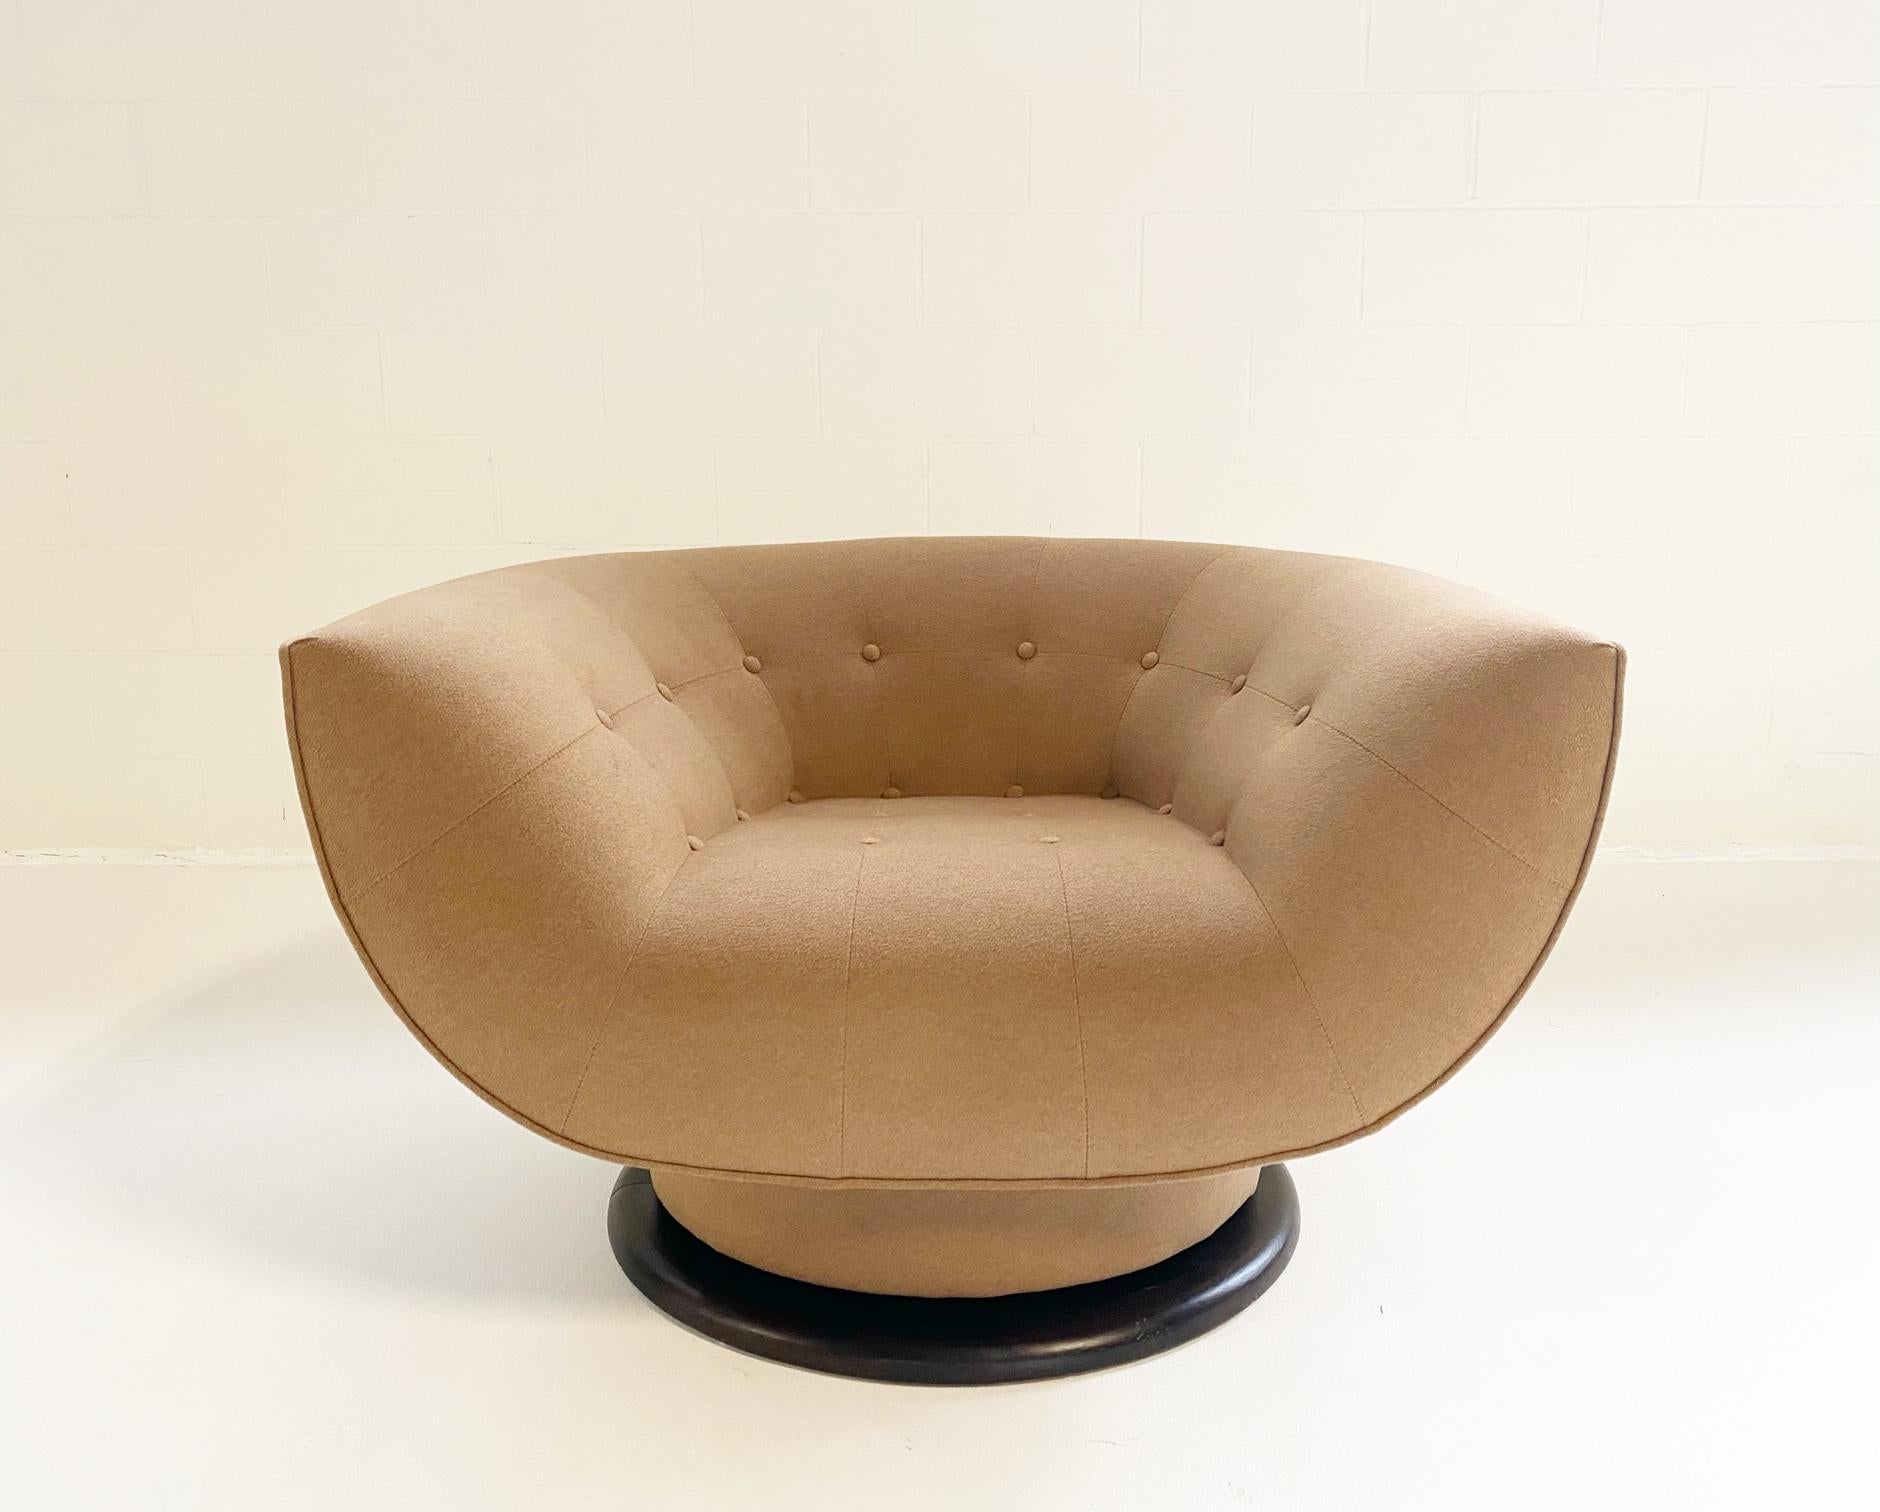 Fabric Adrian Pearsall 360° Swivel Chairs in Loro Piana Cashmere, pair